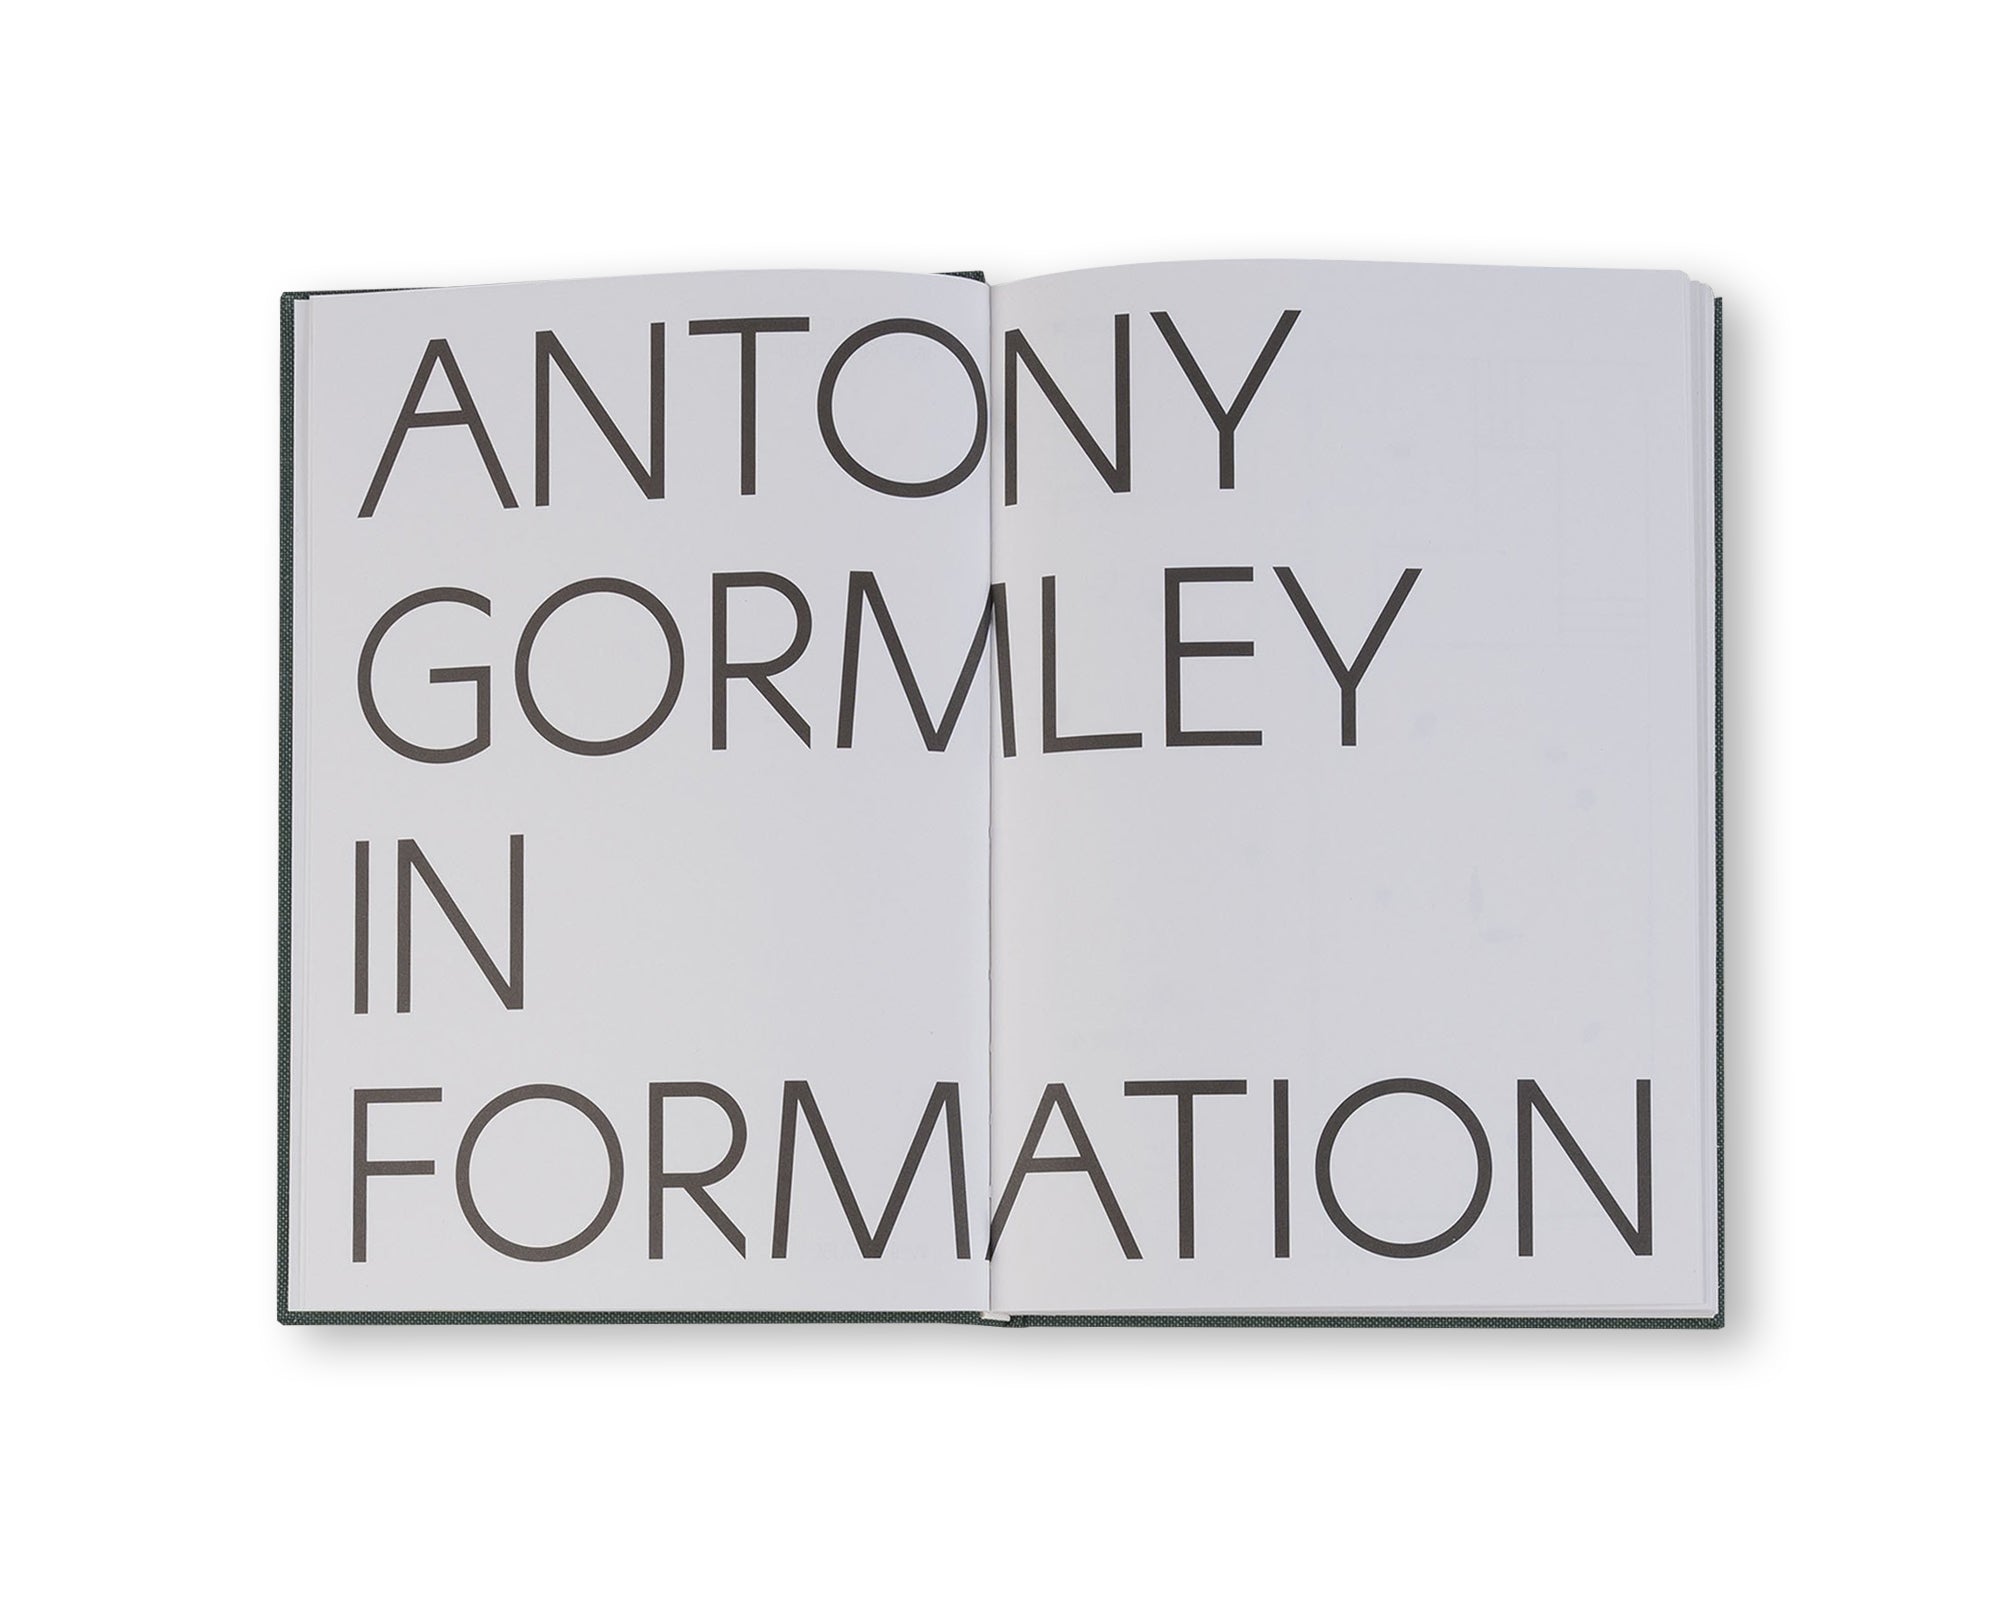 IN FORMATION by Antony Gormley